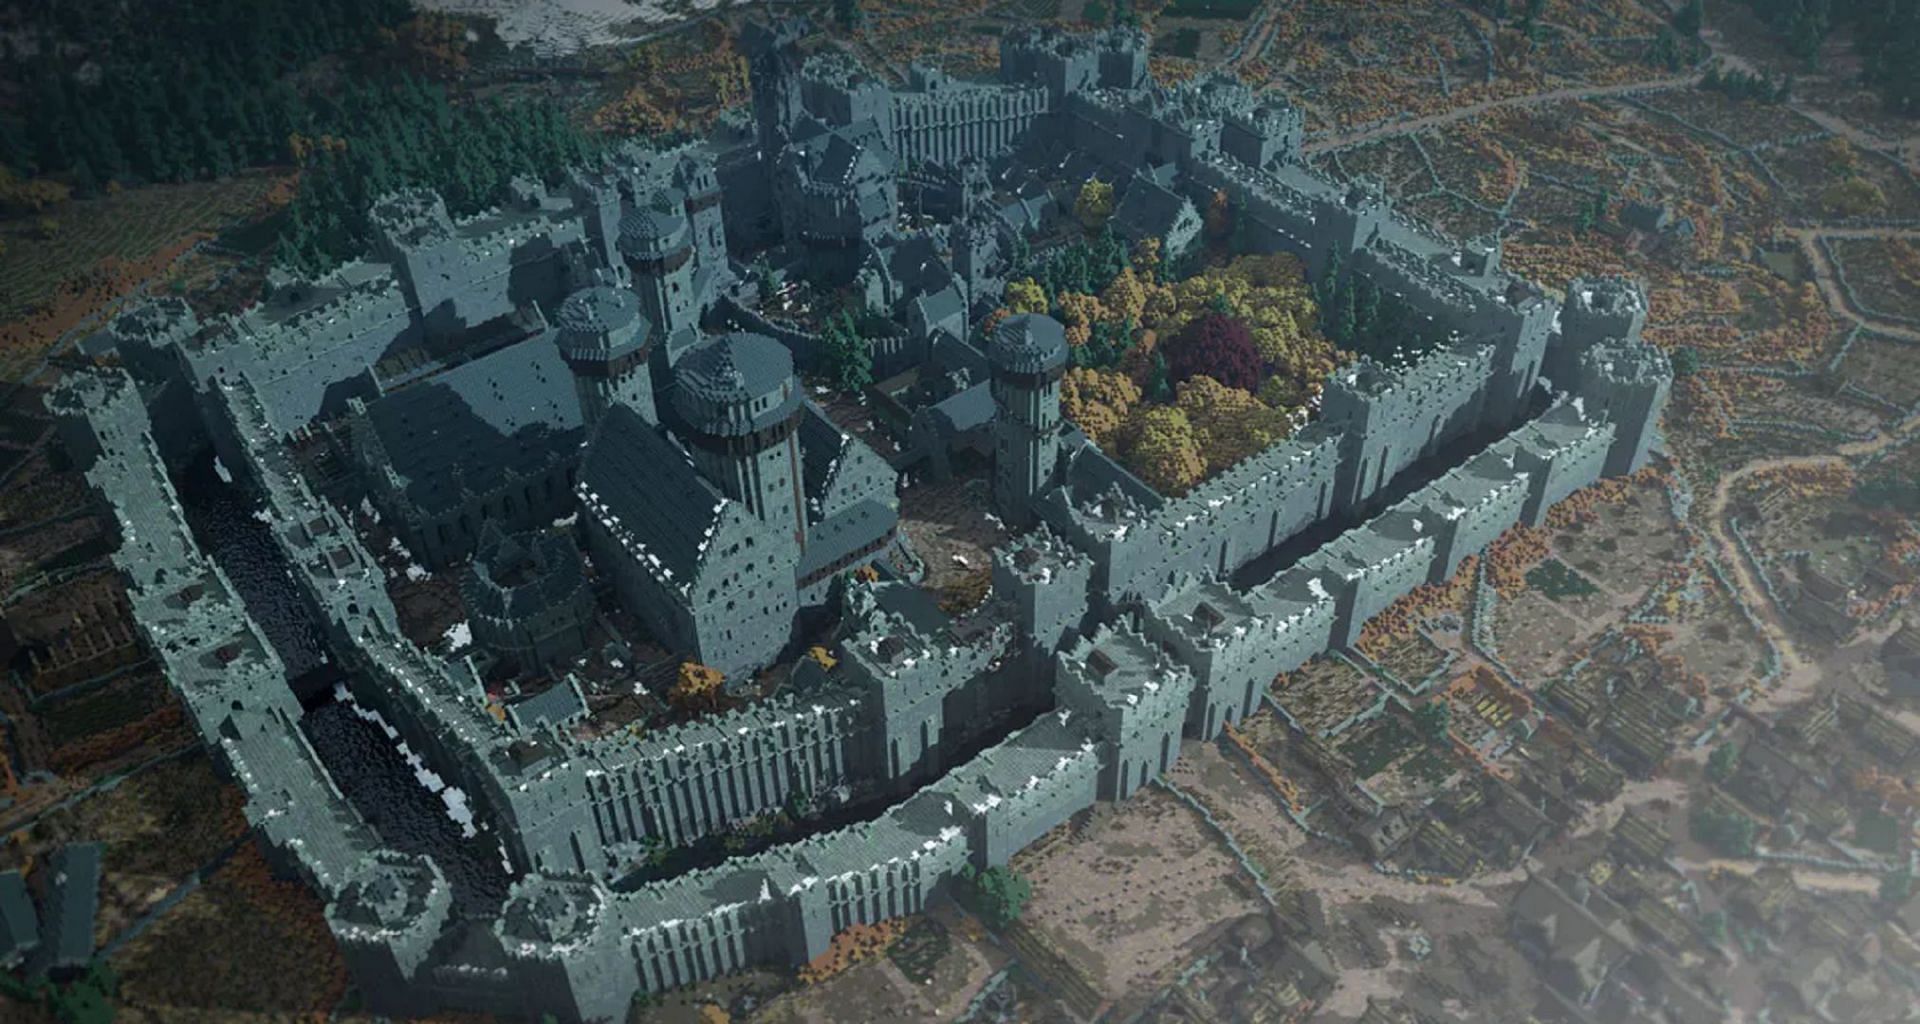 The icy castle of Winterfell in Westeroscraft (Image via Westeroscraft)